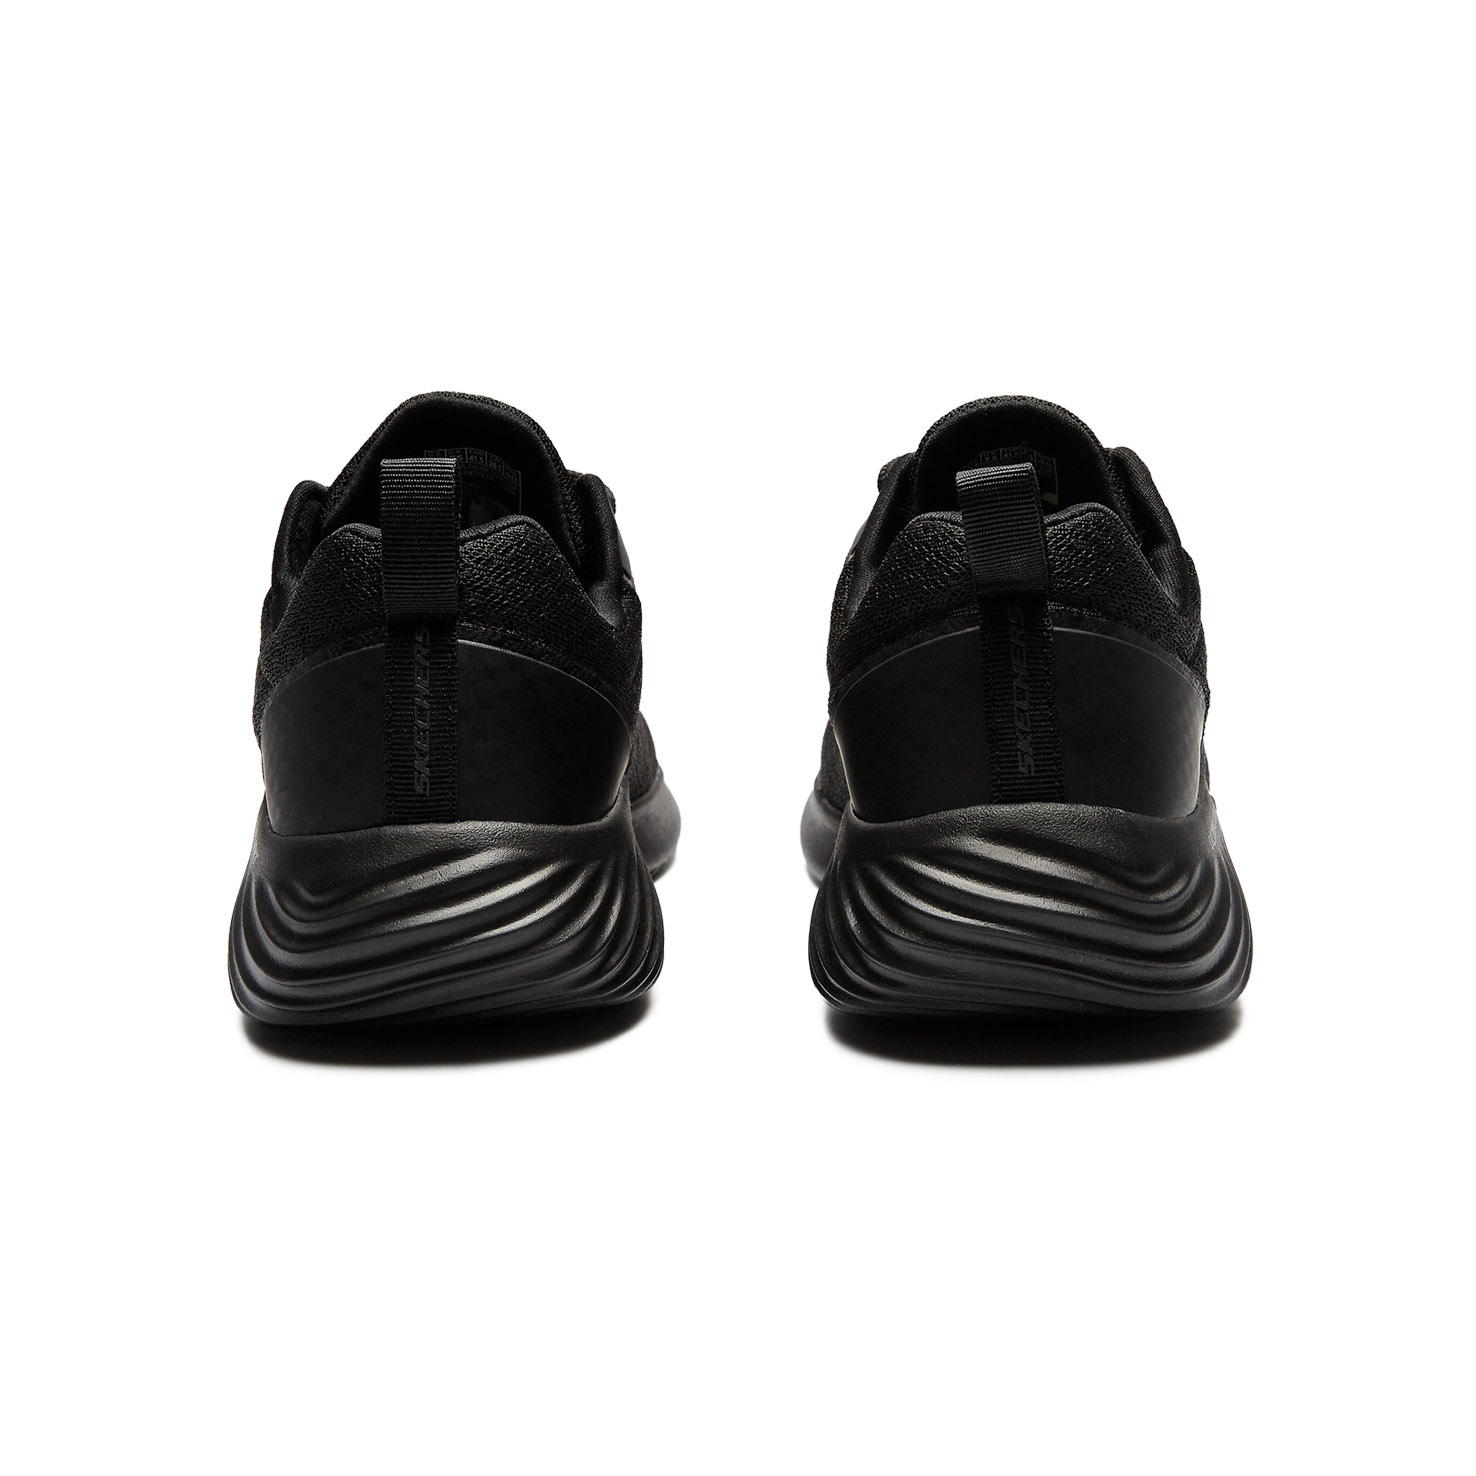 Men's low shoes SKECHERS, размер 40, цвет черный SK232005 - фото 4